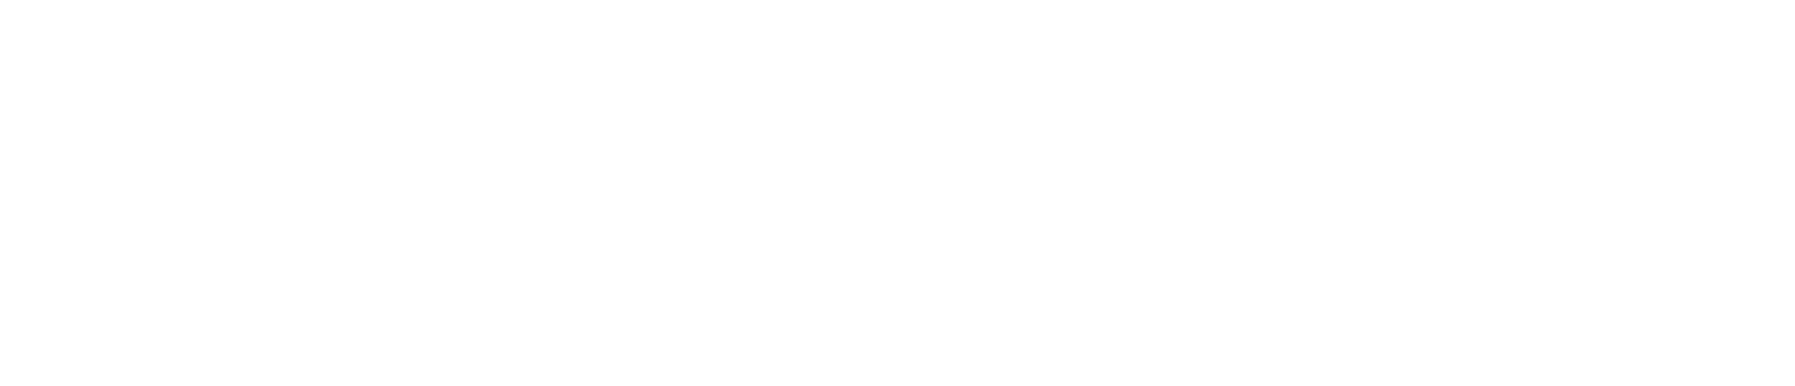 Steven Wesley Guiles